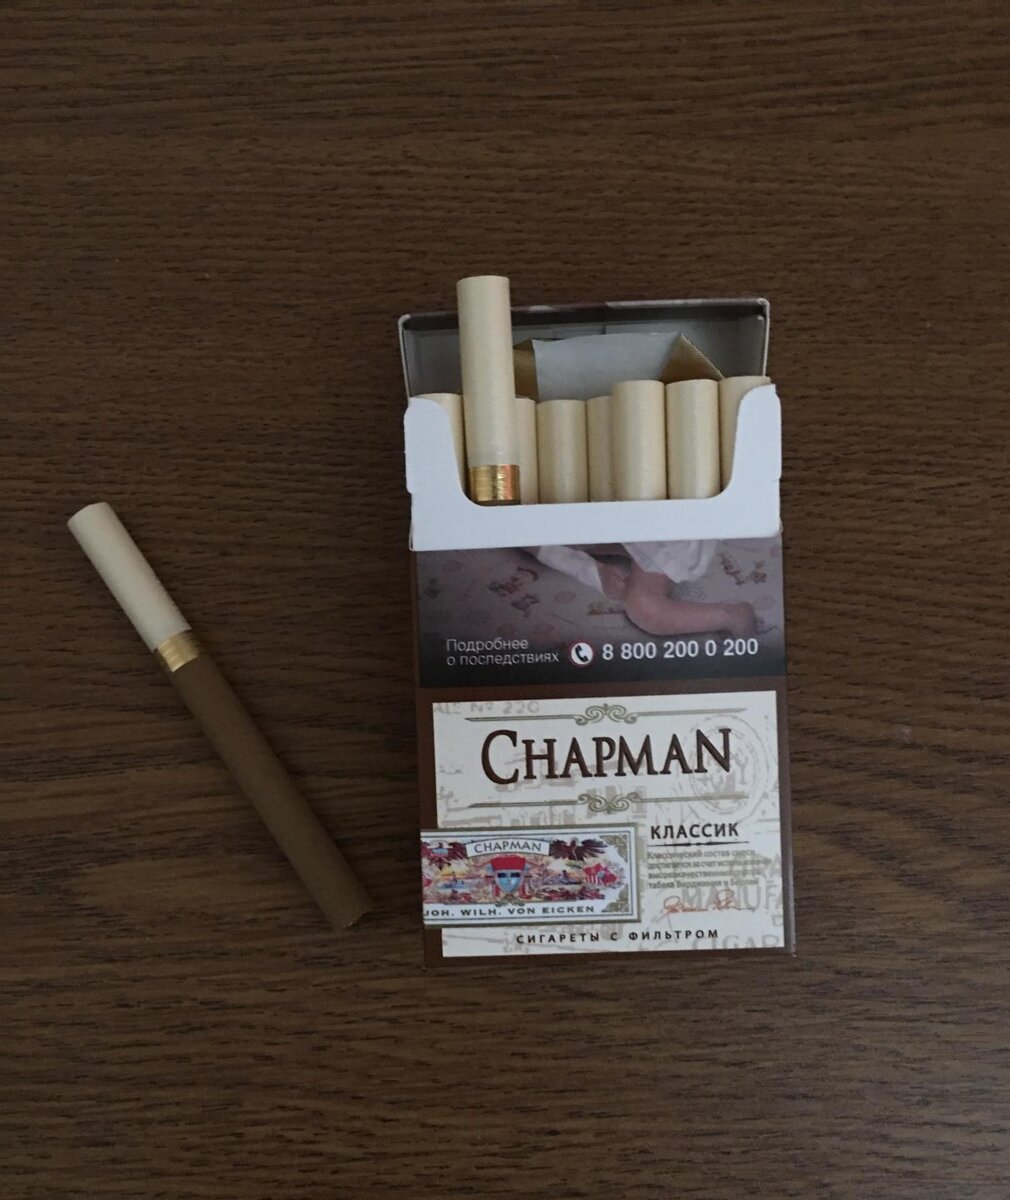 Чапман компакт сигареты. Сигареты Чапман Браун тонкие. Чапмен сигареты Классик. Chapman сигареты вкусы Браун. Чапман сигареты класси.